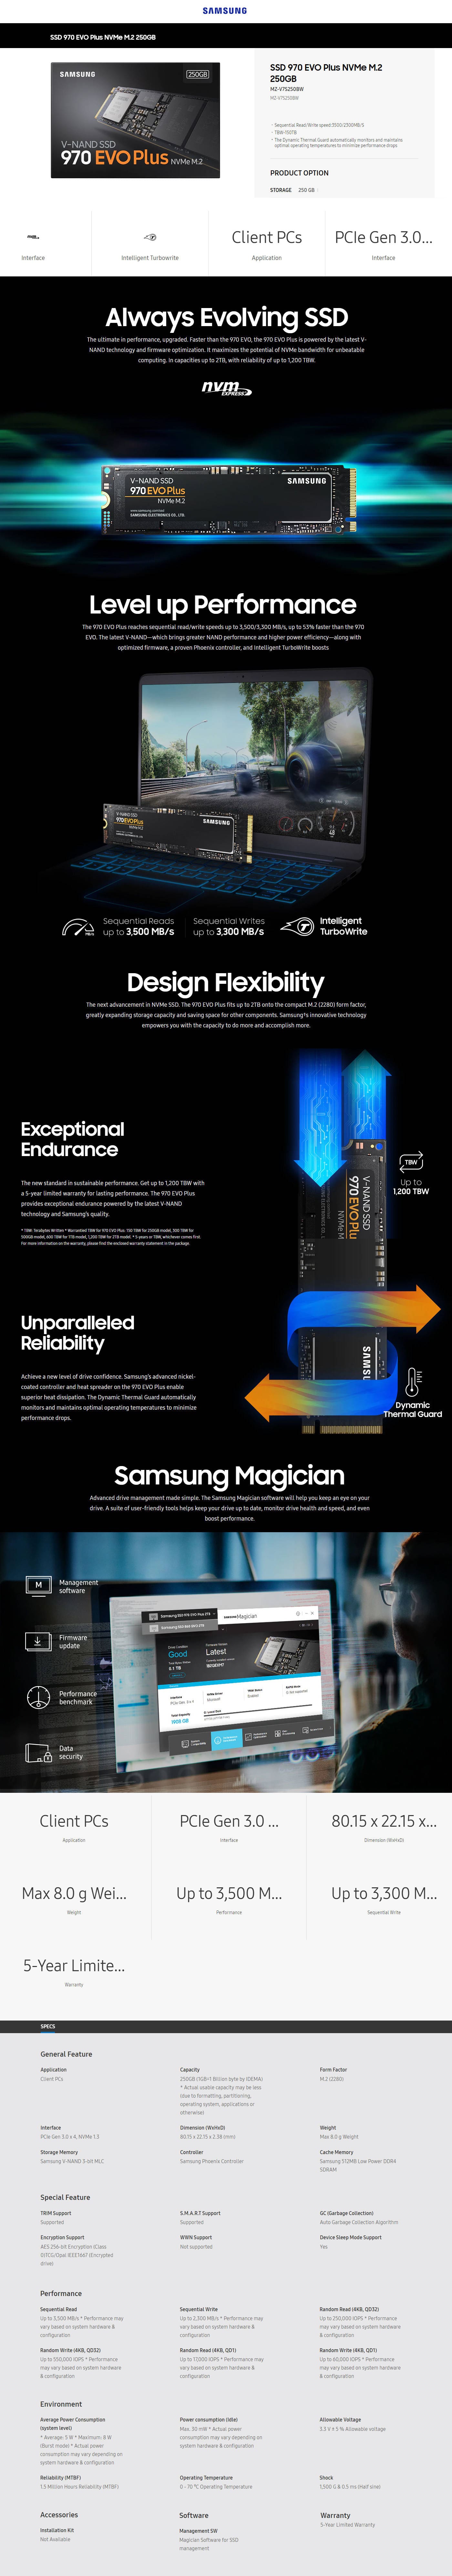 Buy Online Samsung 970 EVO Plus 250GB NVMe M.2 Internal Solid State Drive (MZ-V7S250BW)